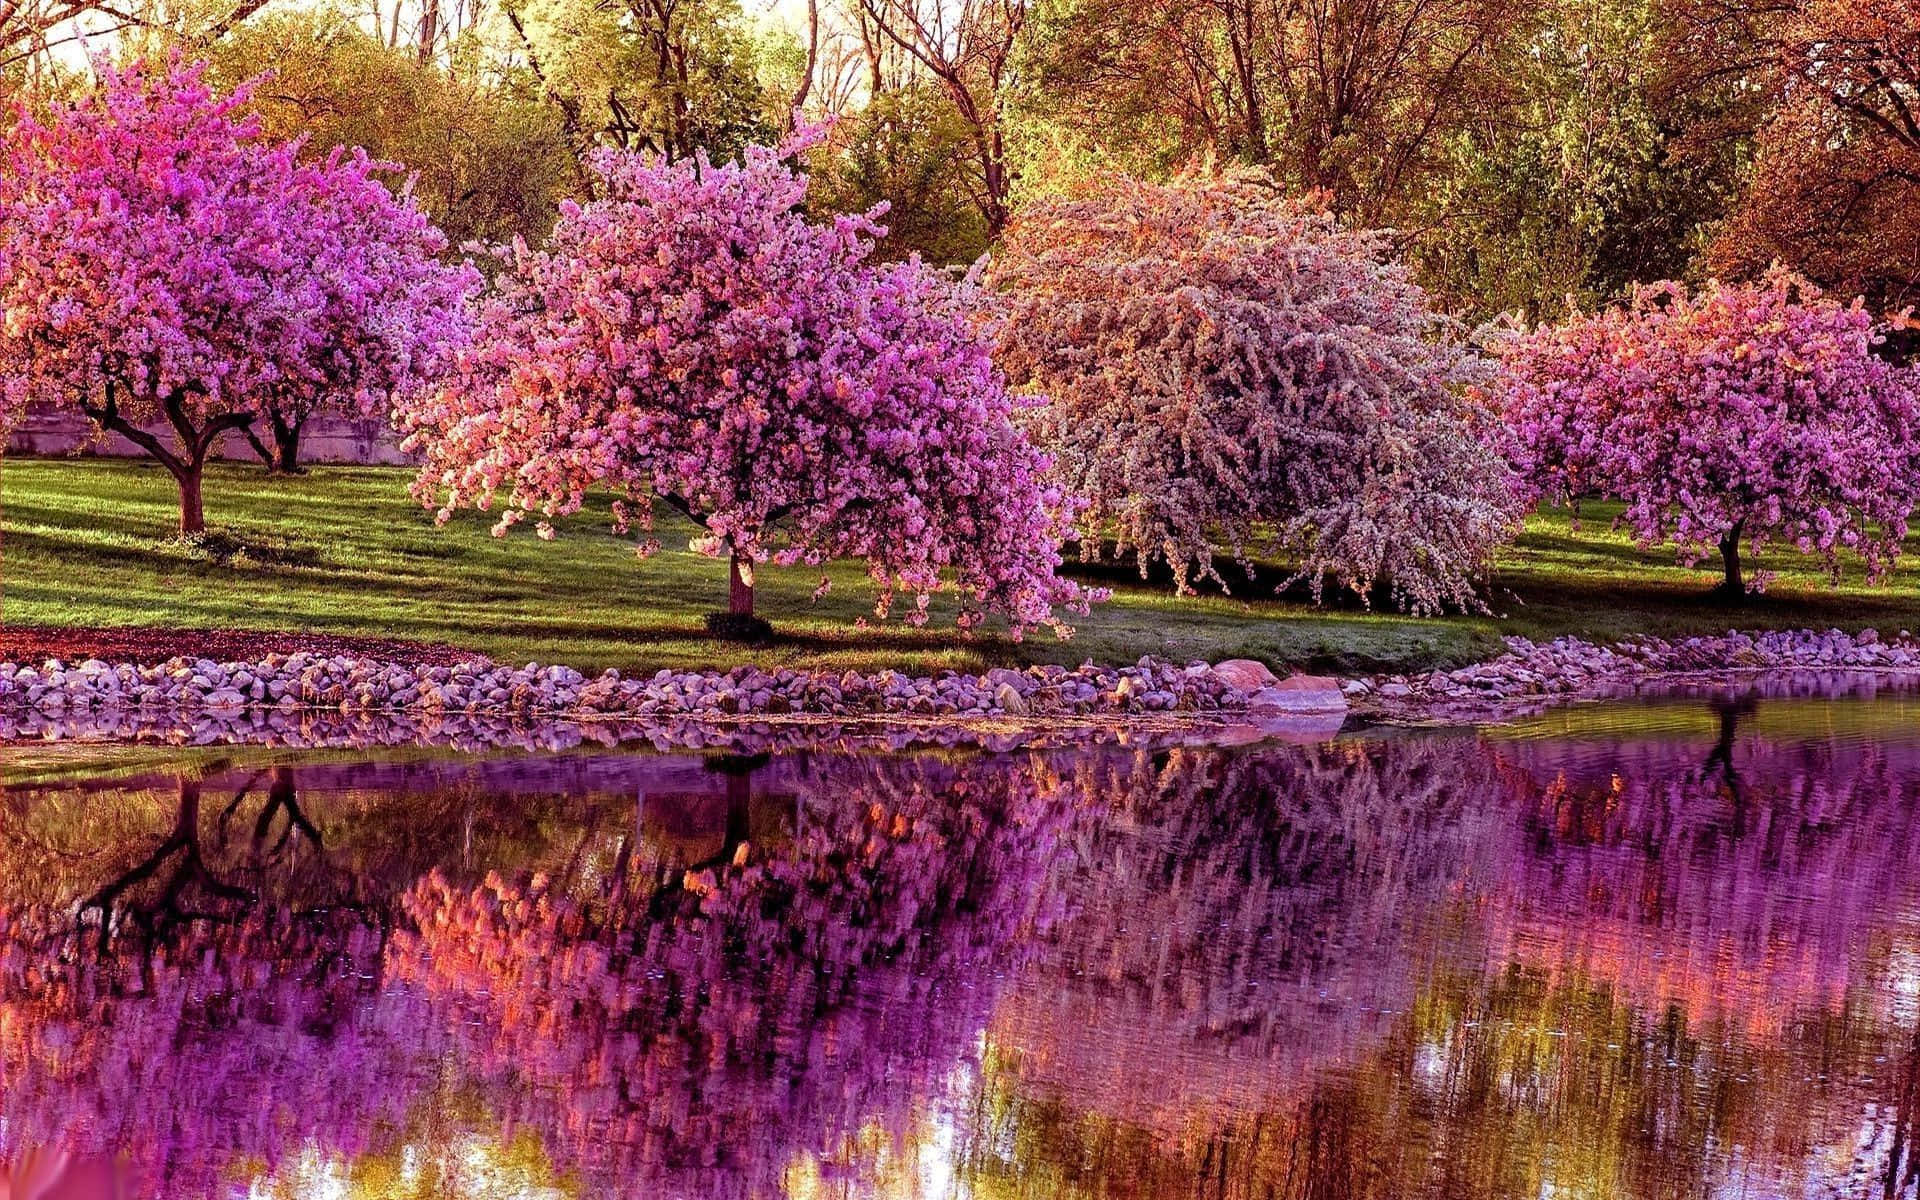 Njutav Vårens Skönhet Med Dessa Färgglada Blommor Som Bakgrundsbild På Datorn Eller Mobilen. Wallpaper